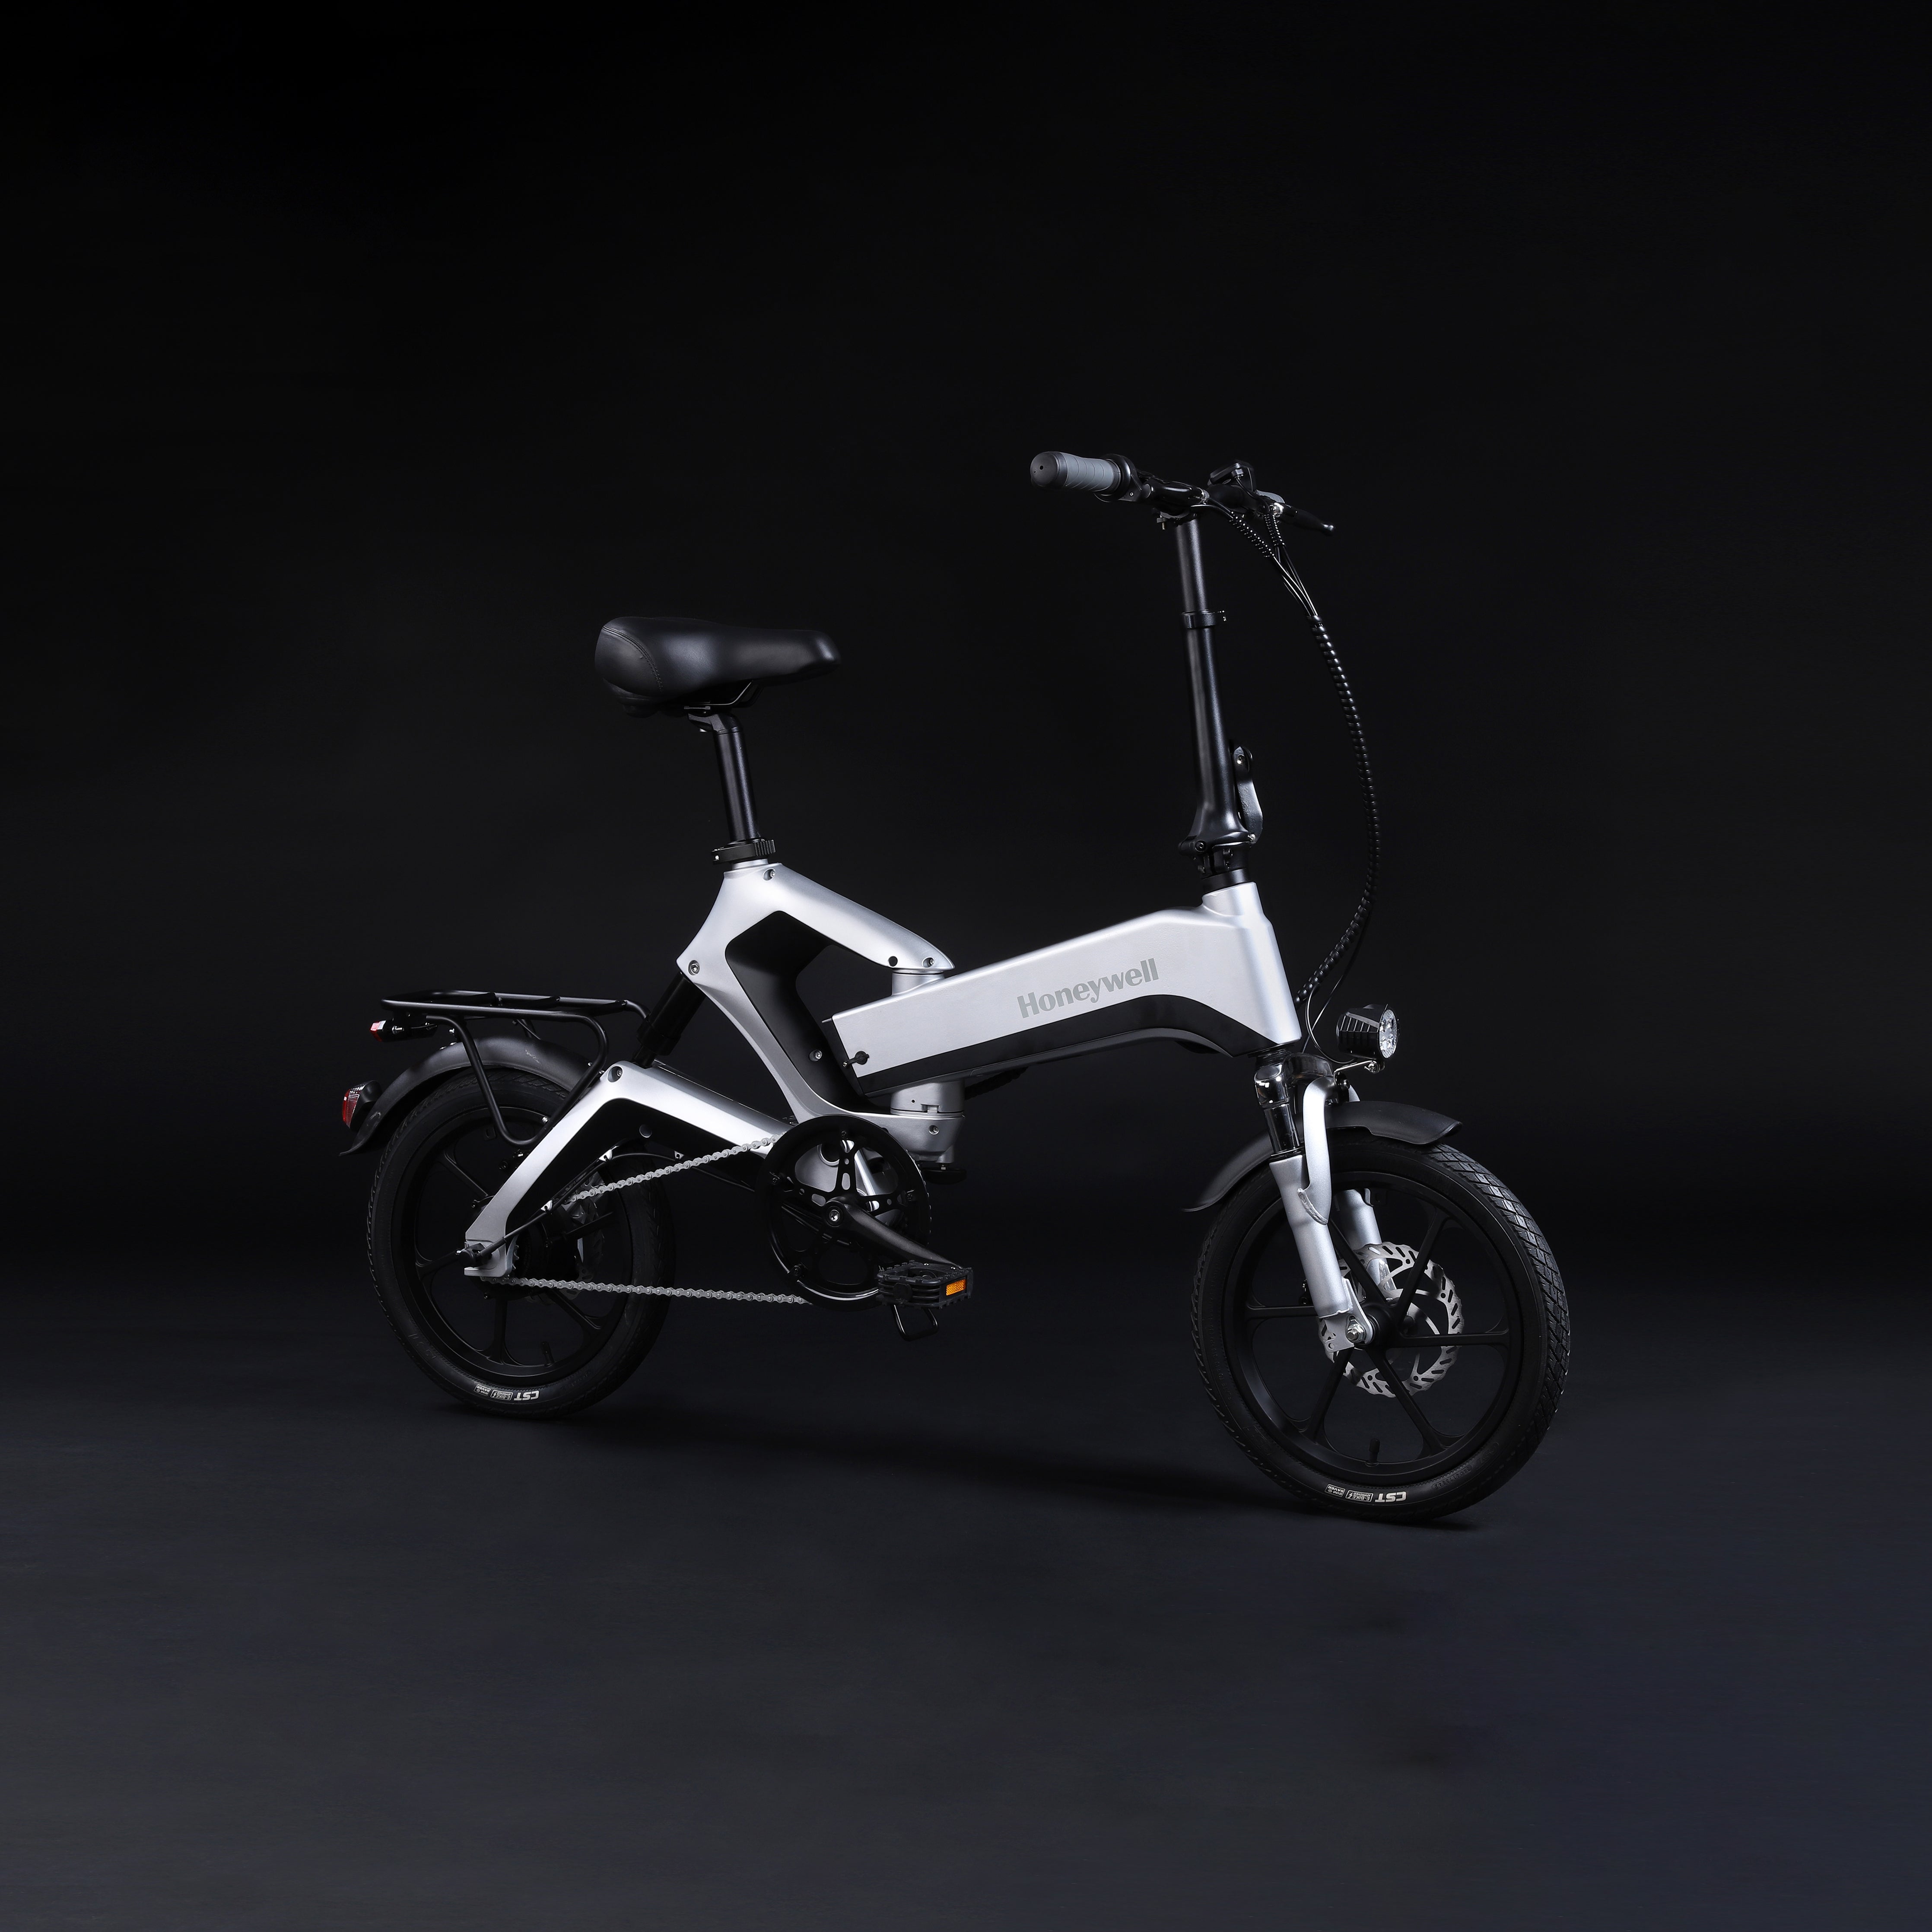 Honeywell Dasher Electric Foldable Bike | HoneywellBikes